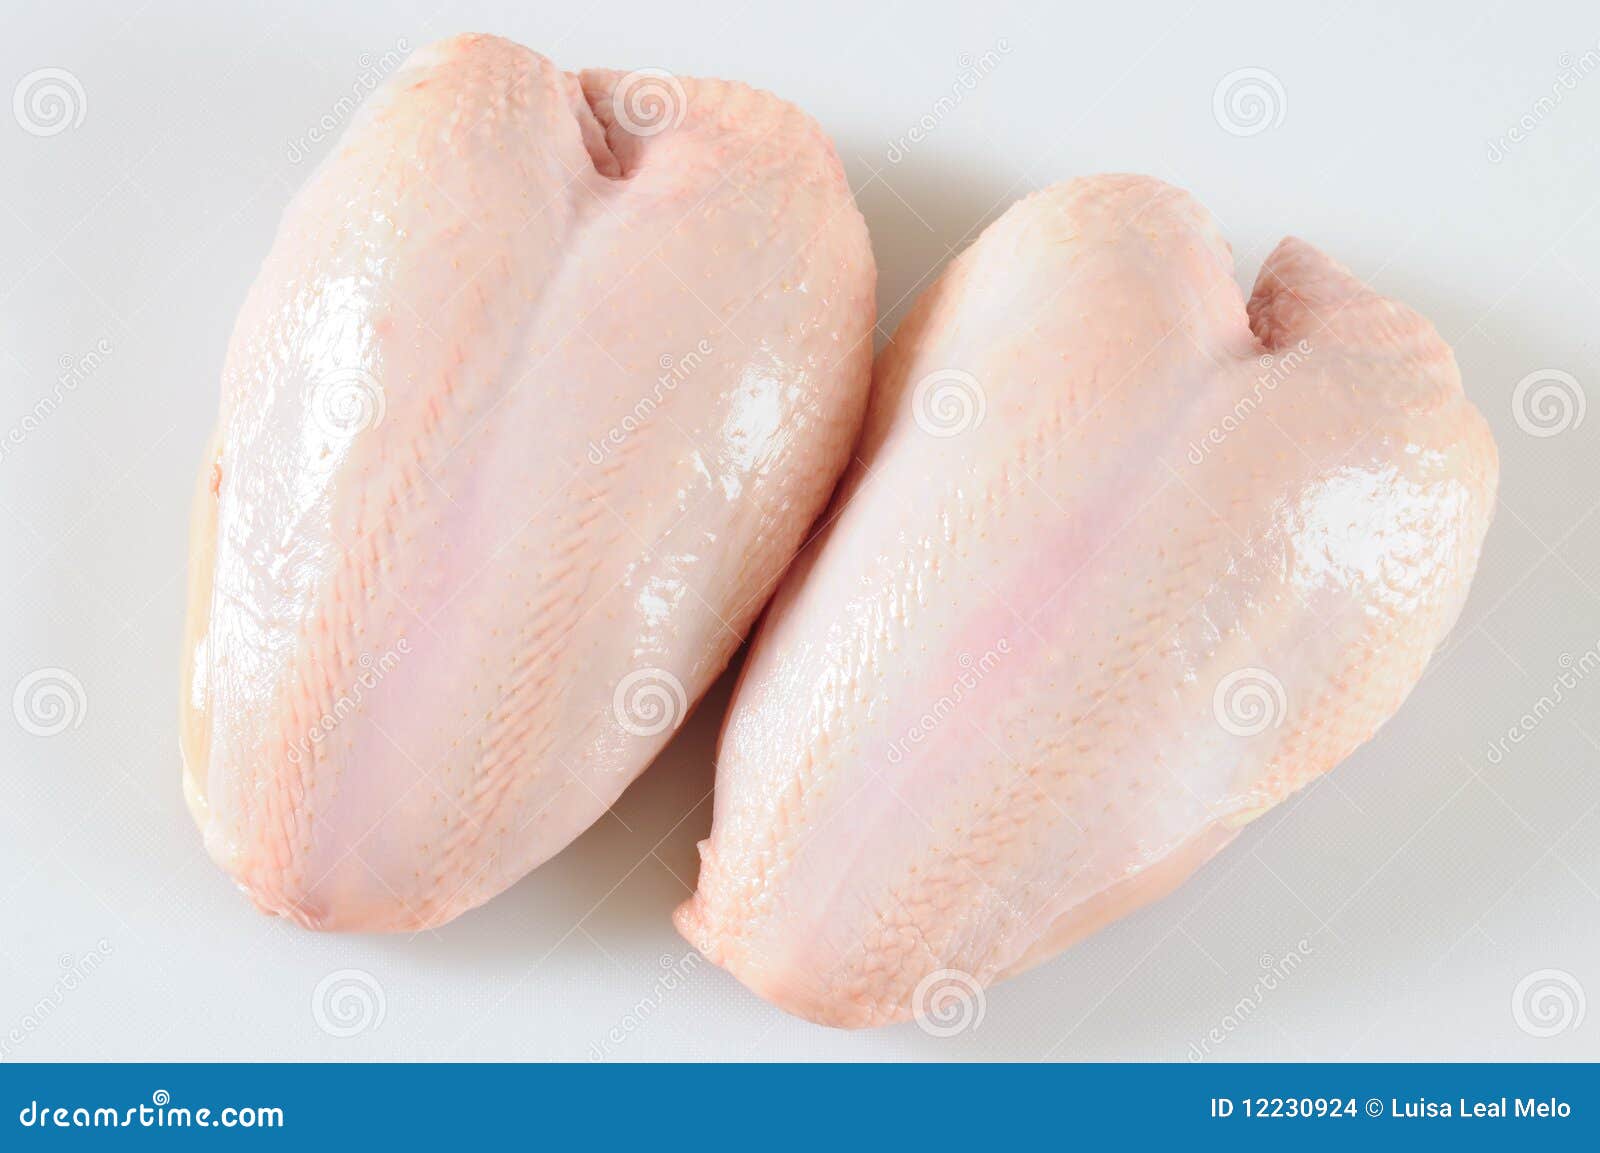 chicken-breast-12230924.jpg